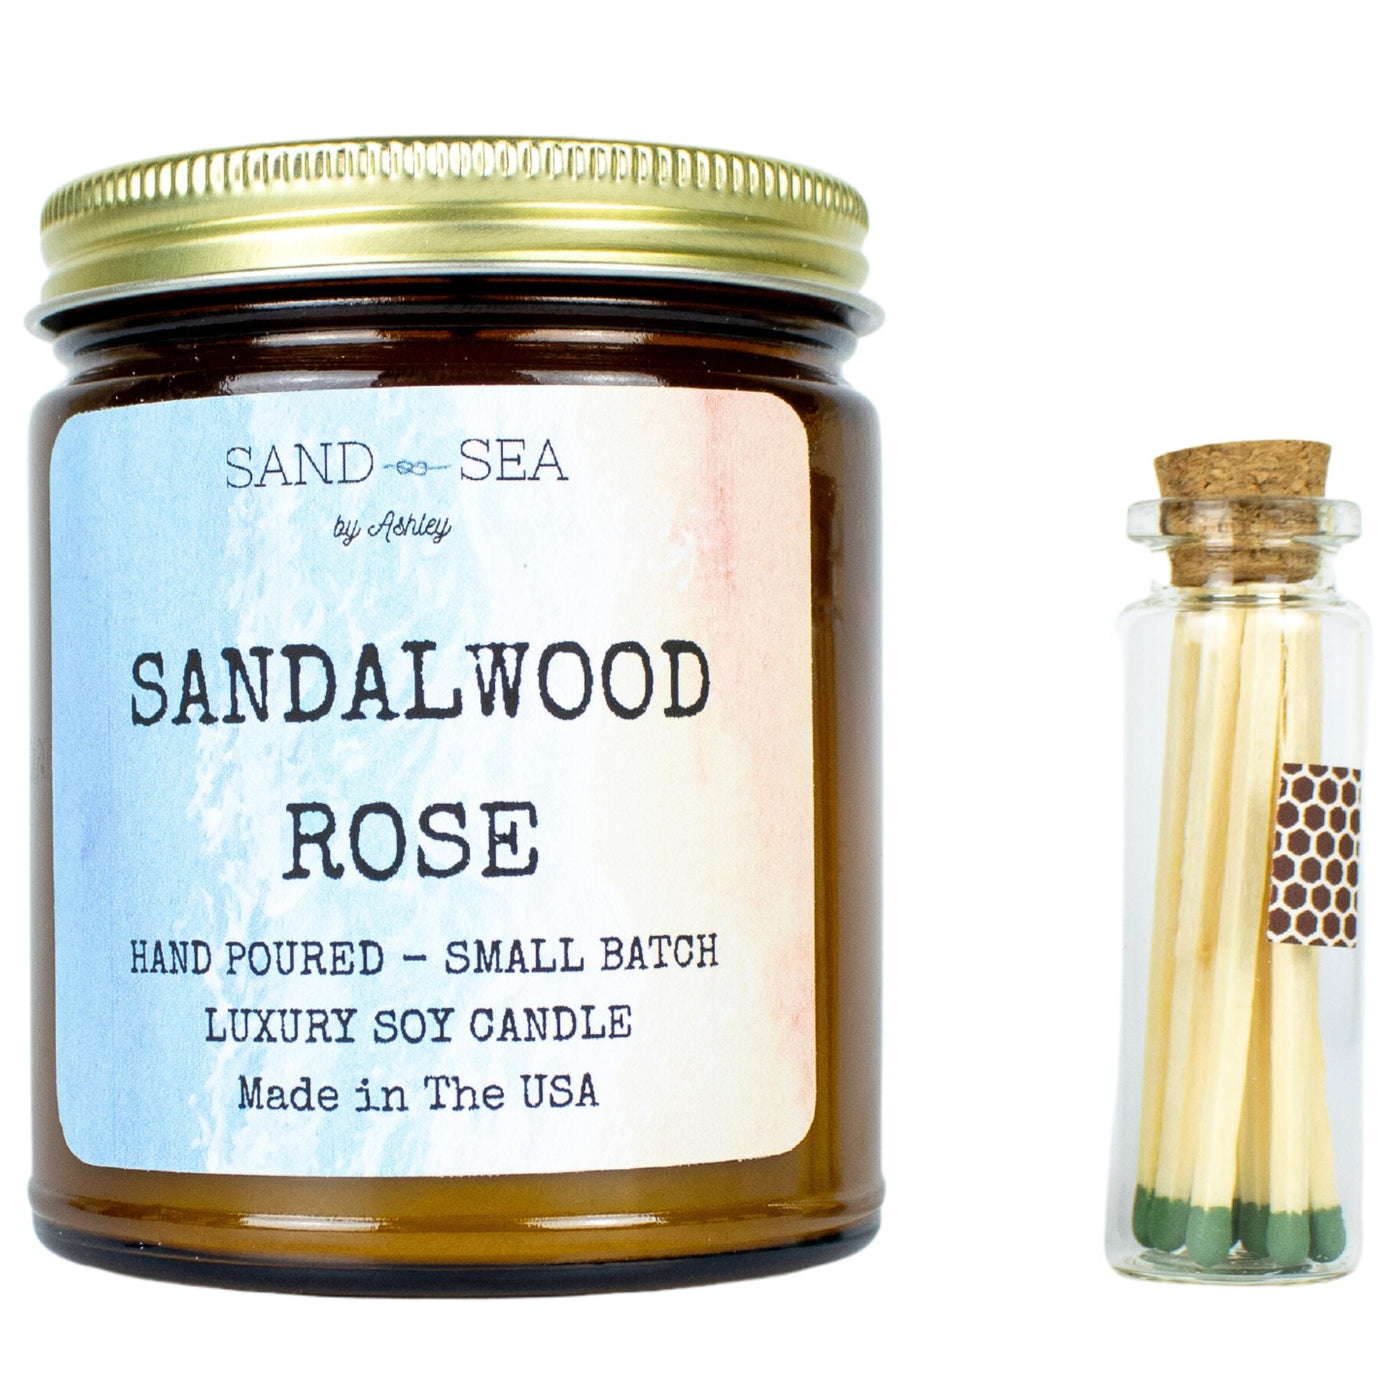 Sandalwood Rose - Handmade Soy Candle 8 oz - Sand & Sea by Ashley